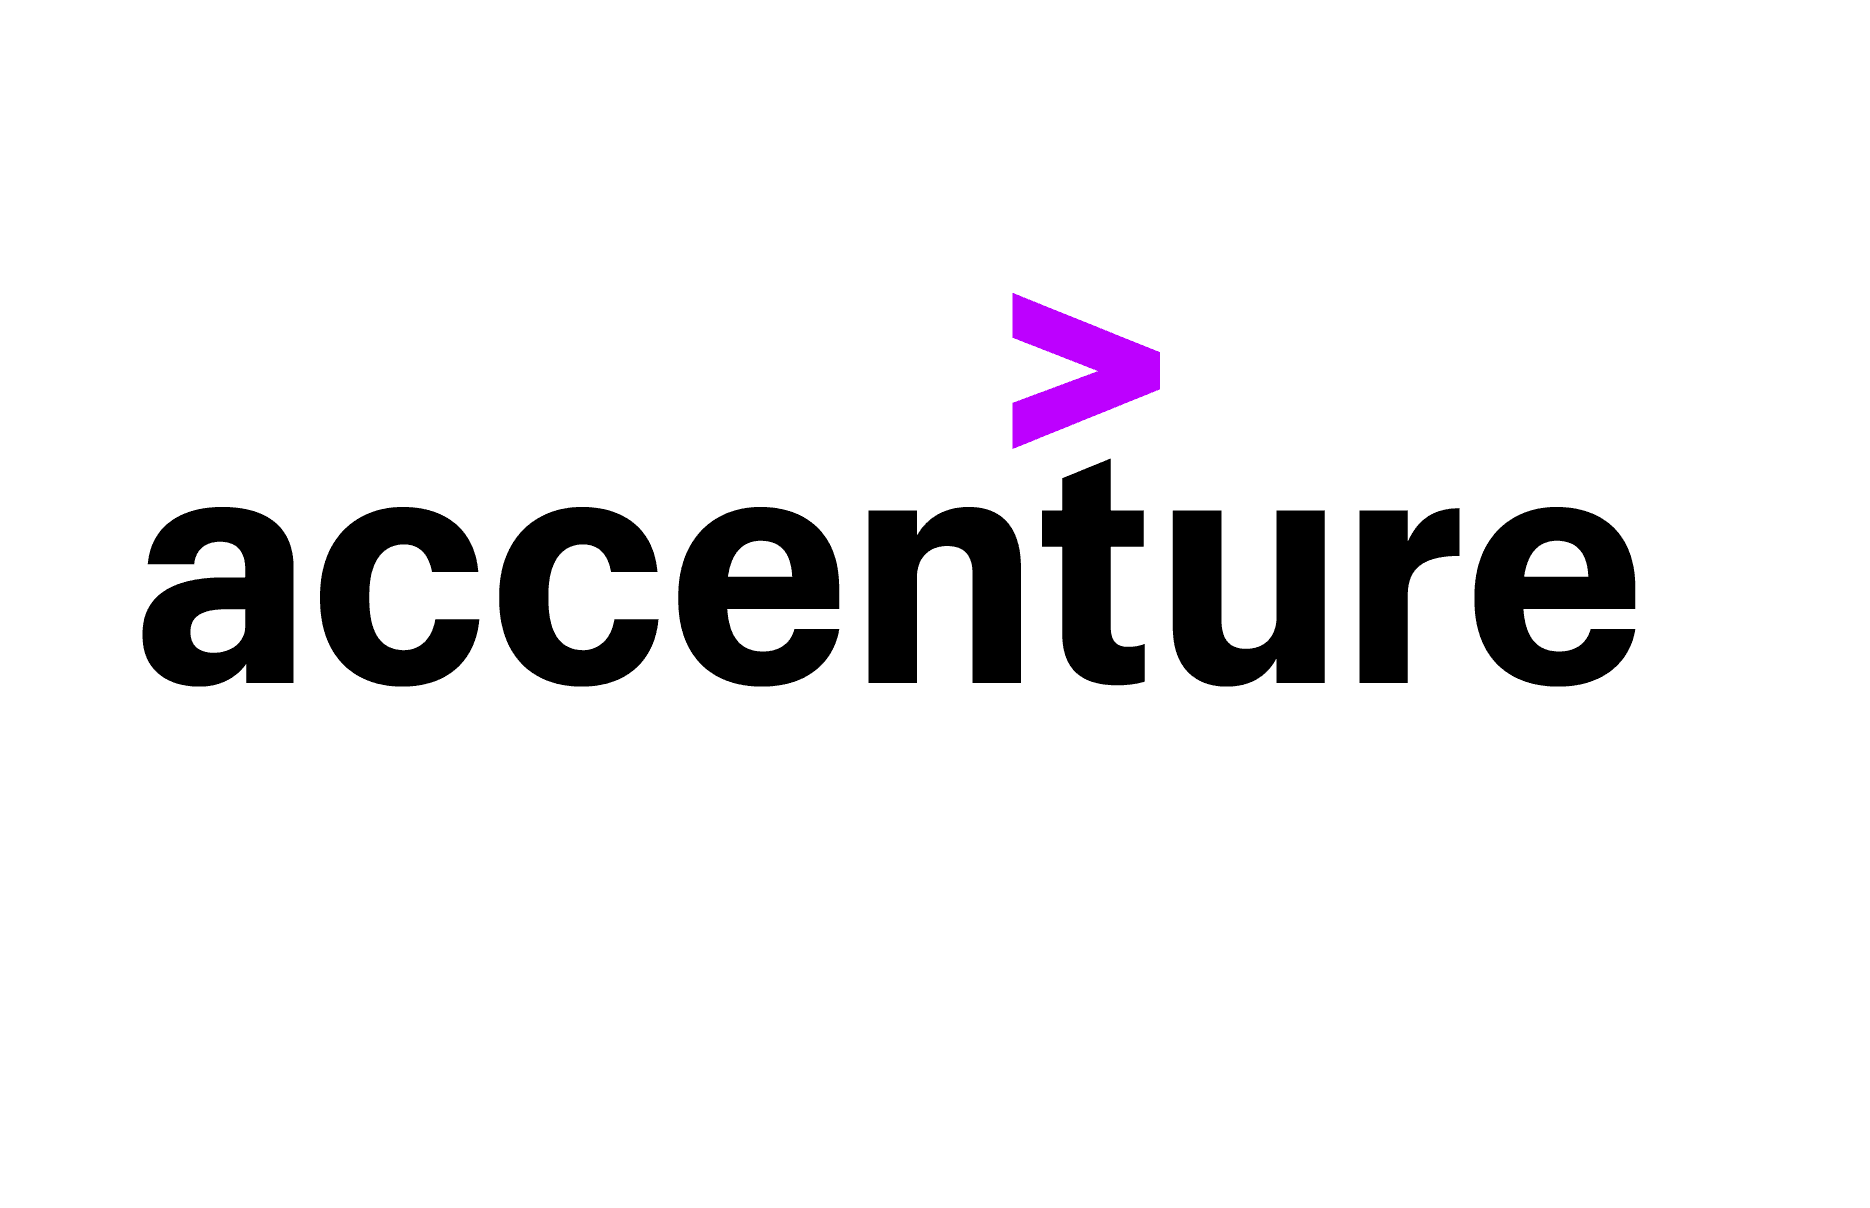 Accenture wiki strategic proposal management cvs health review